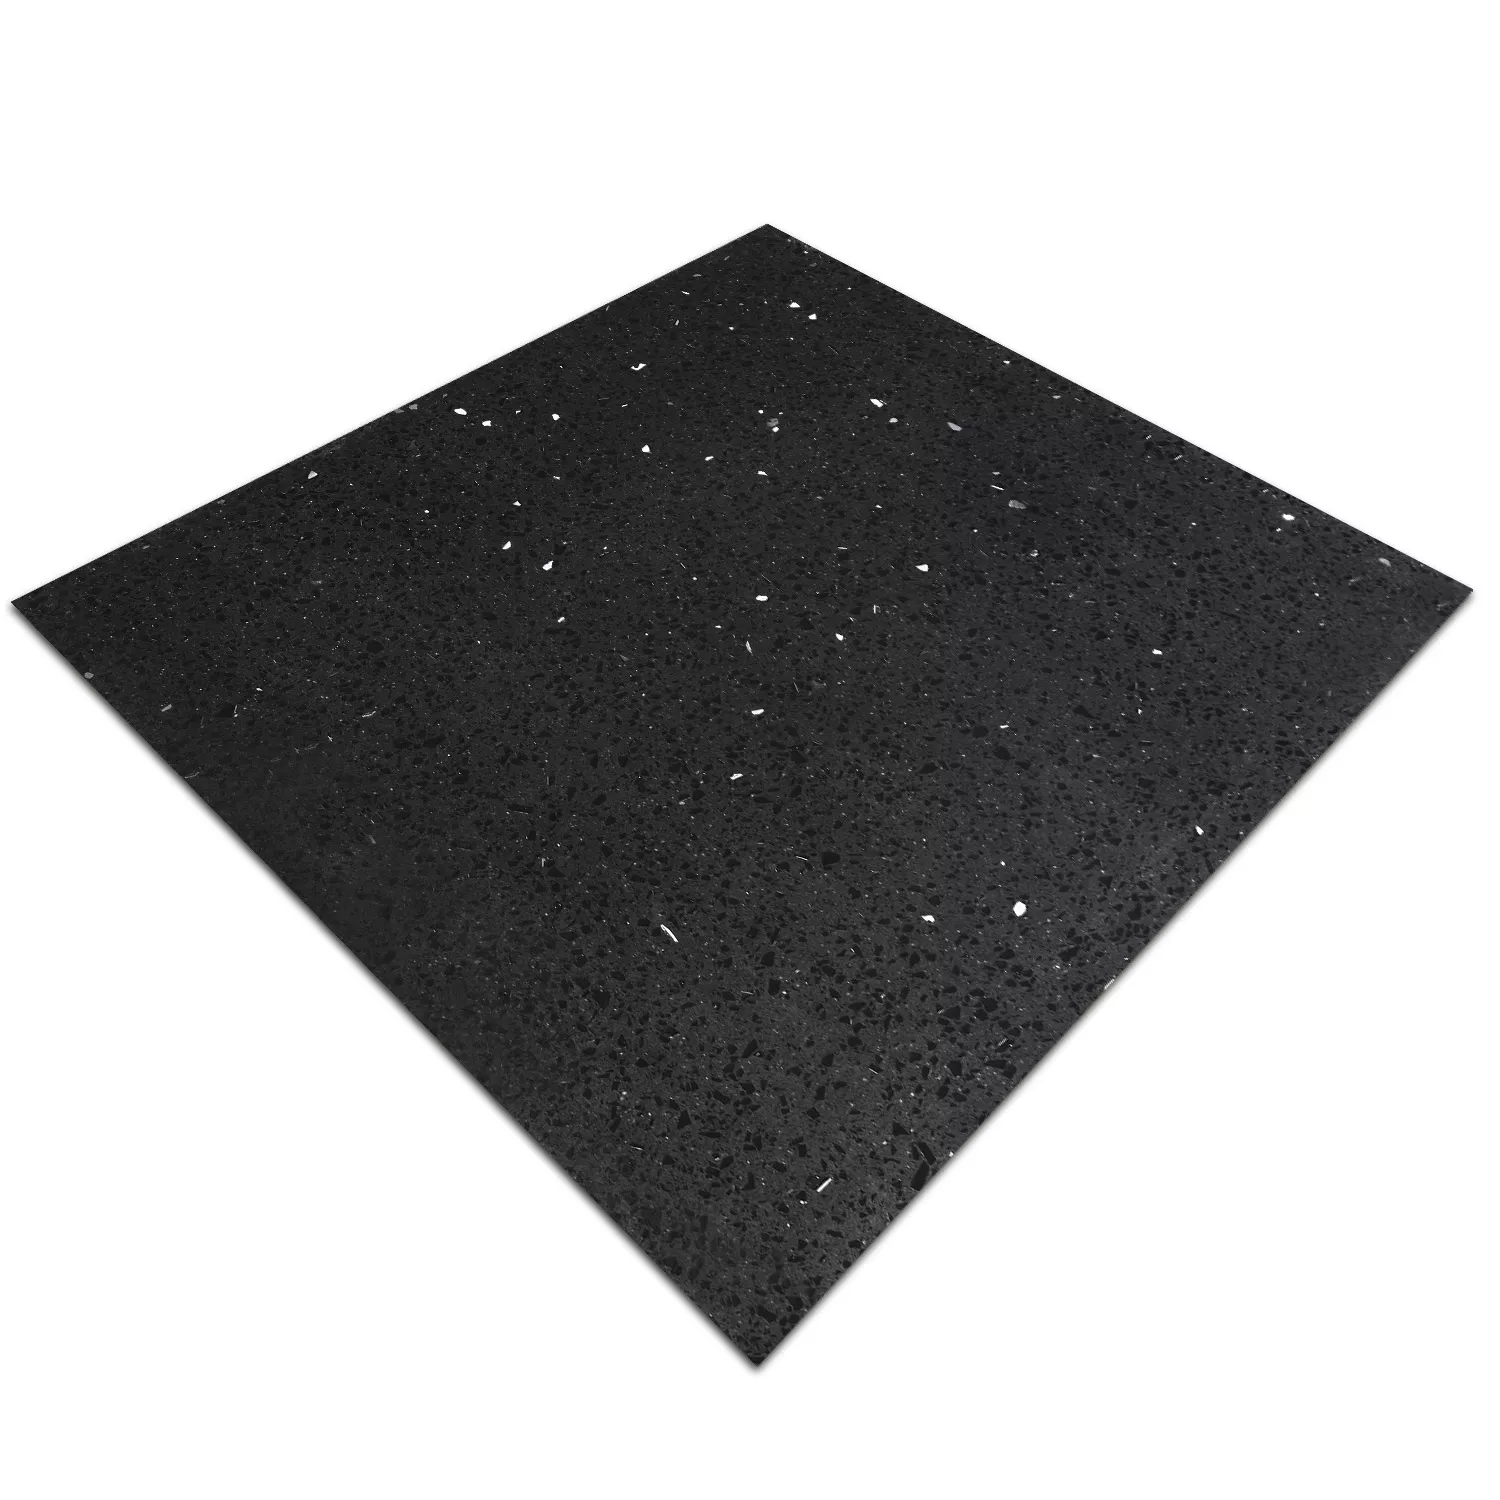 Muestra Pavimentos Cuarzo Composite Negro 30x30cm